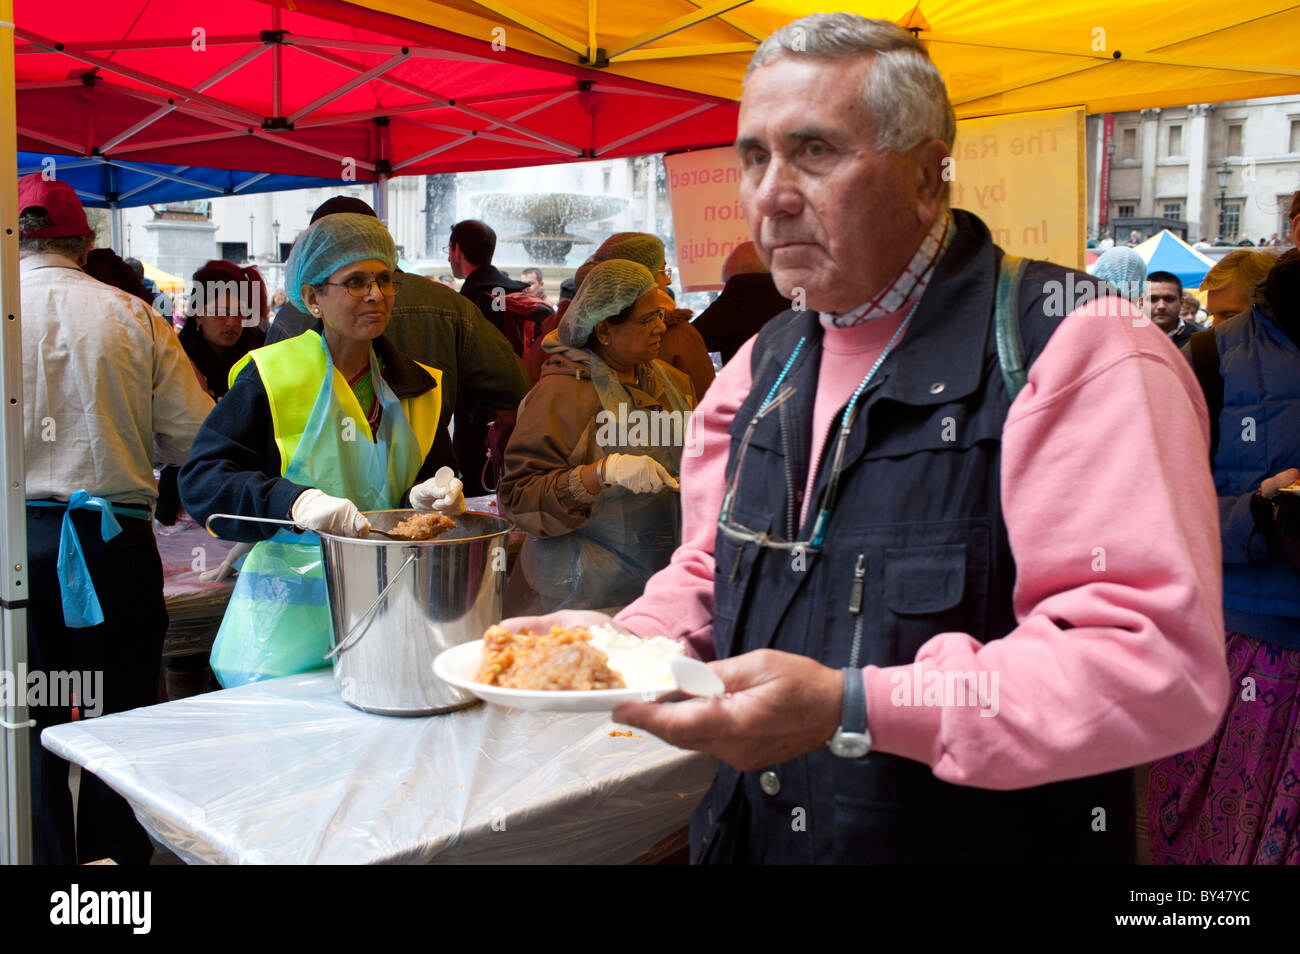 Man with free meal provided at celebration of  Ratha Yatra The Hindu Festival of Chariots,Trafalgar Square,London 2010 Stock Photo